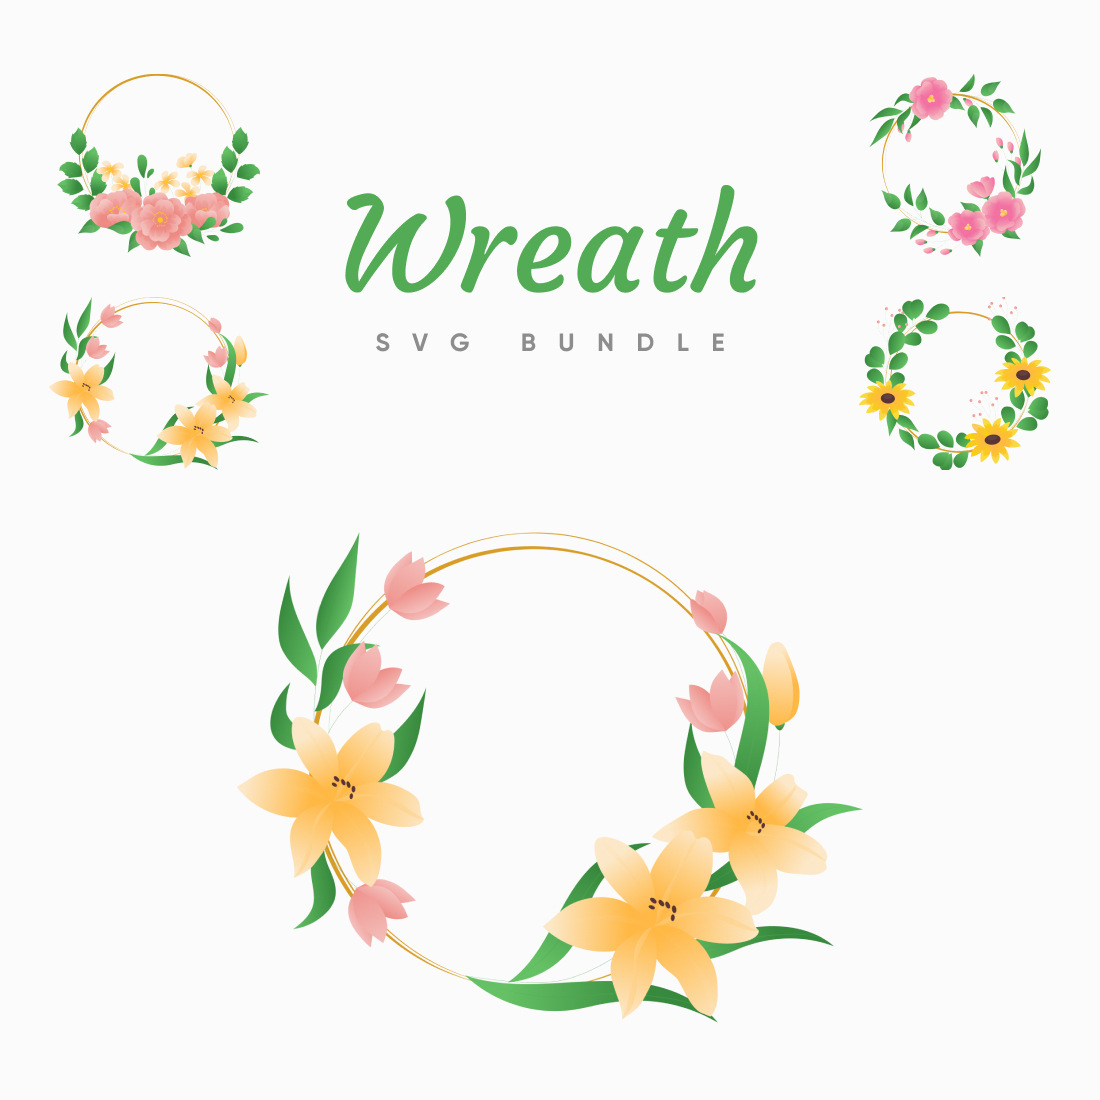 Wreath SVG Files Bundle cover image.